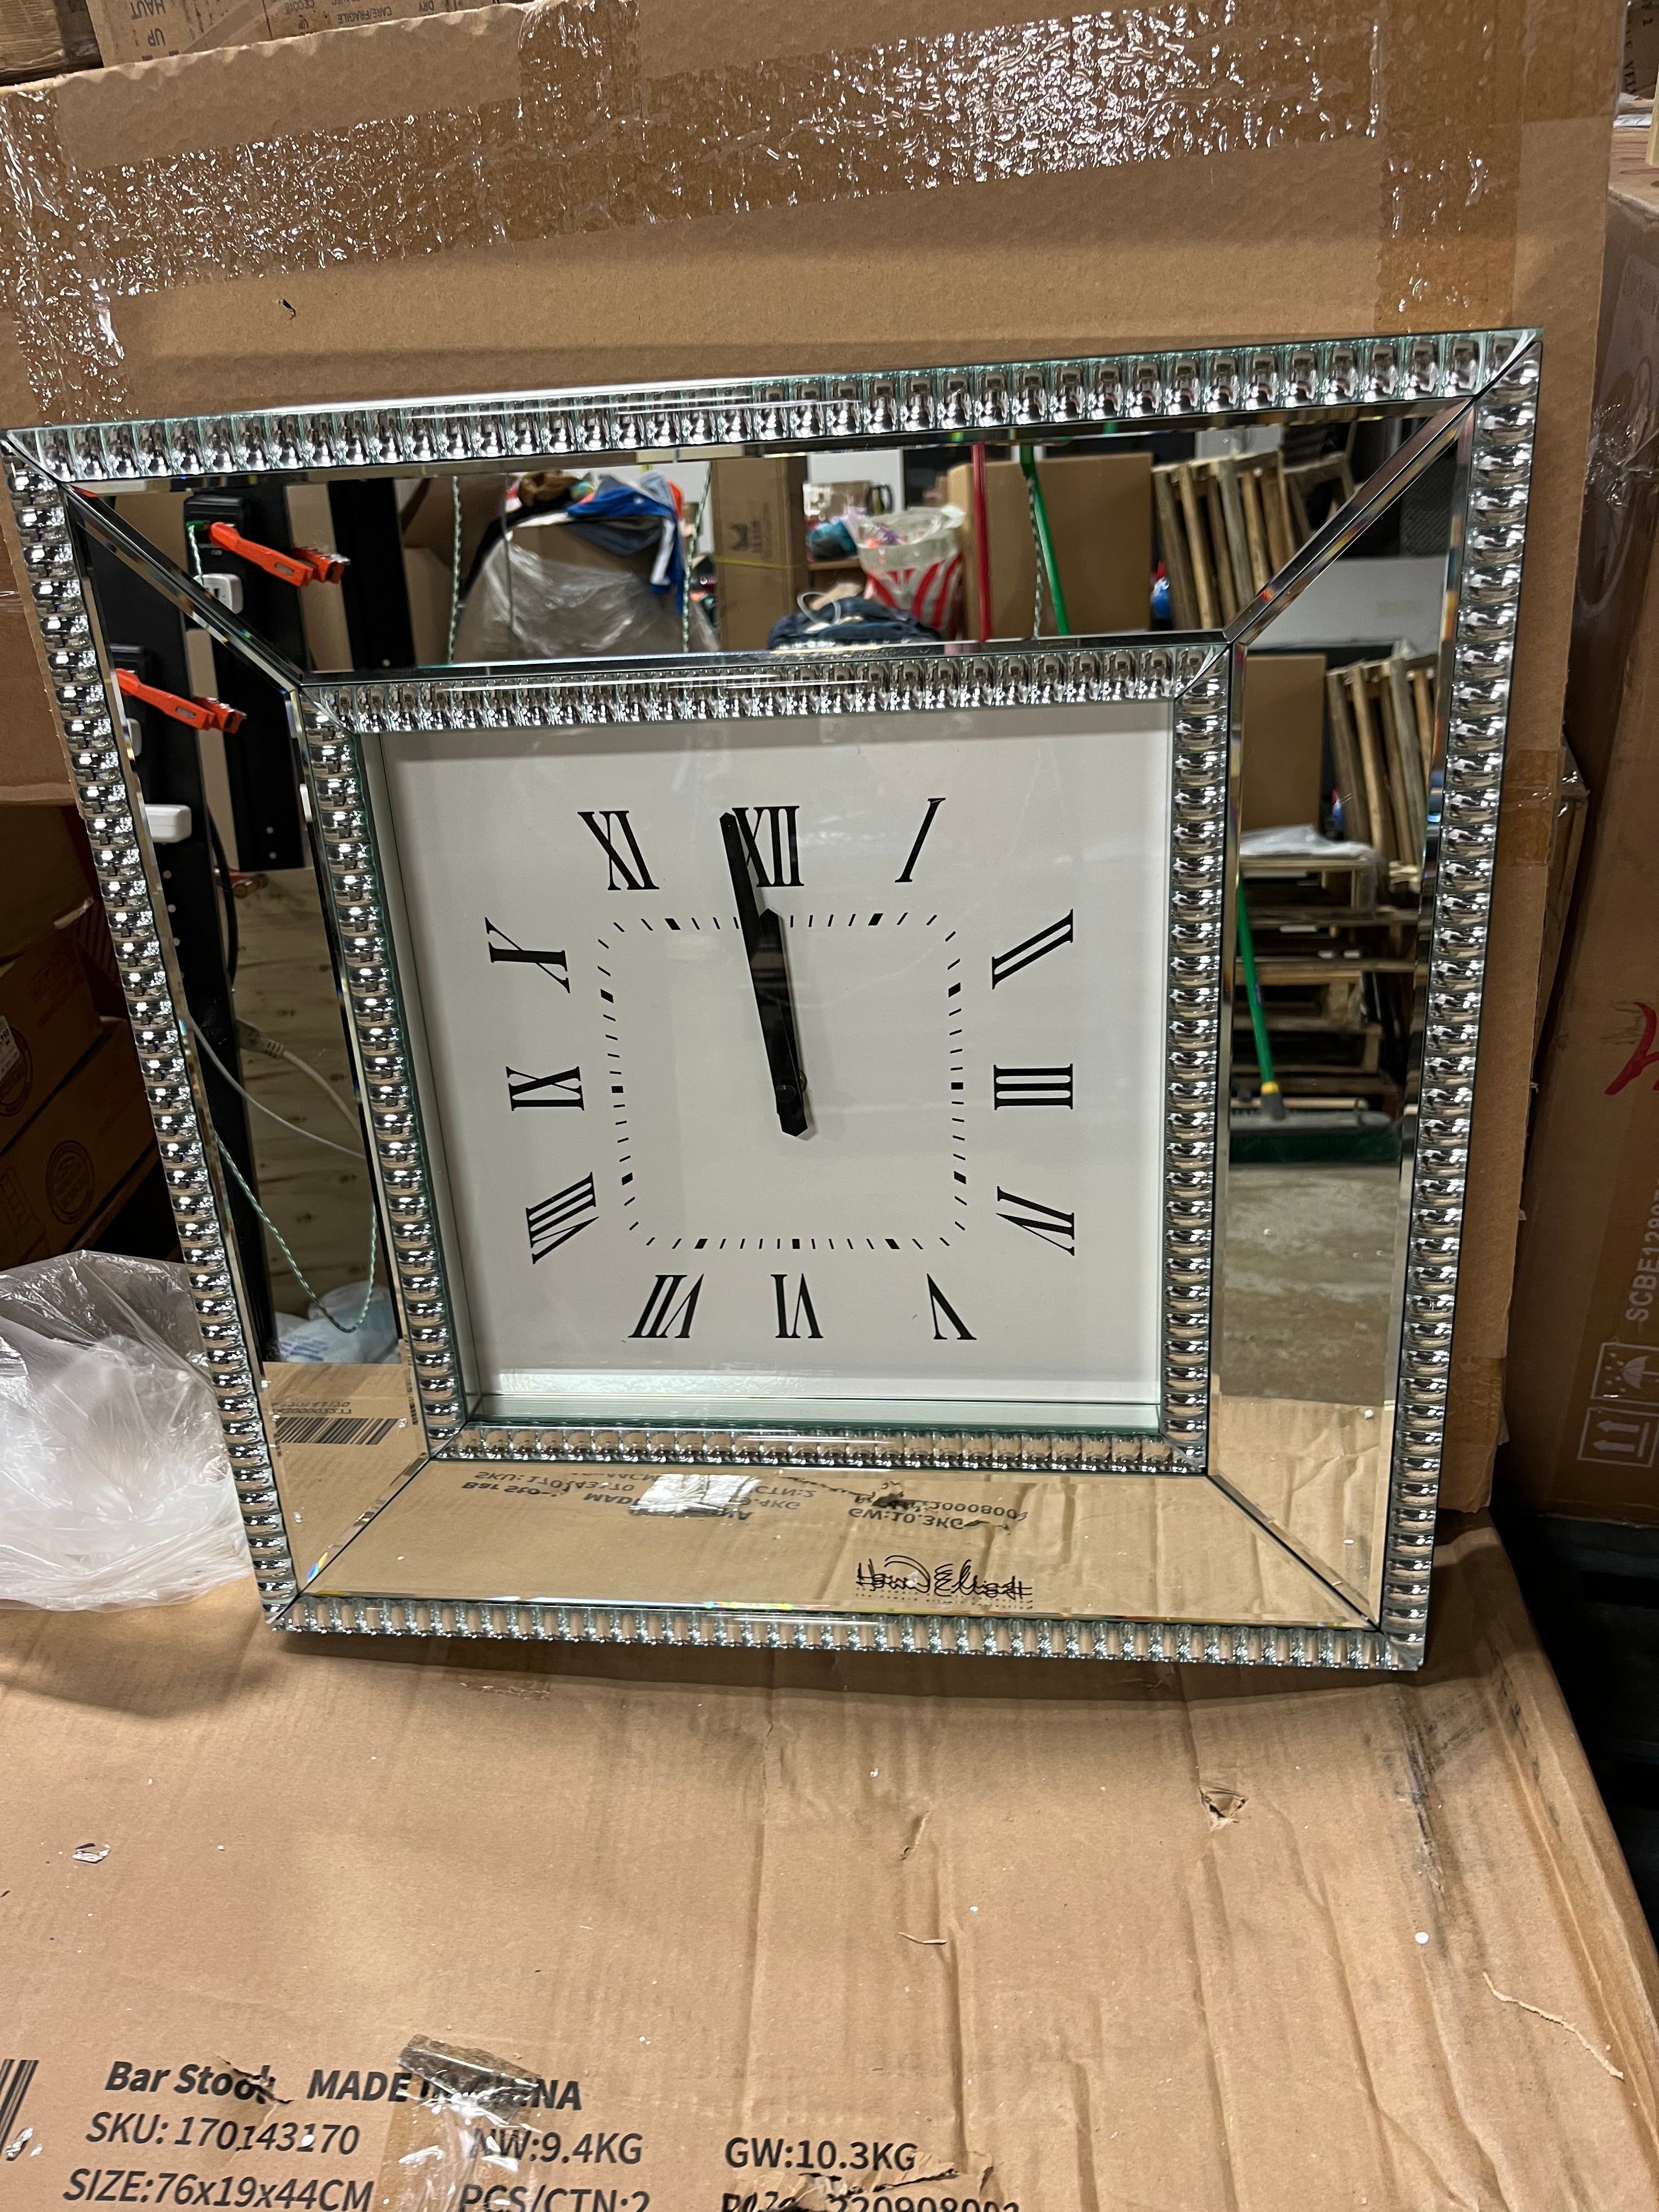 Mirrored Square Frame Decorative Wall Clock